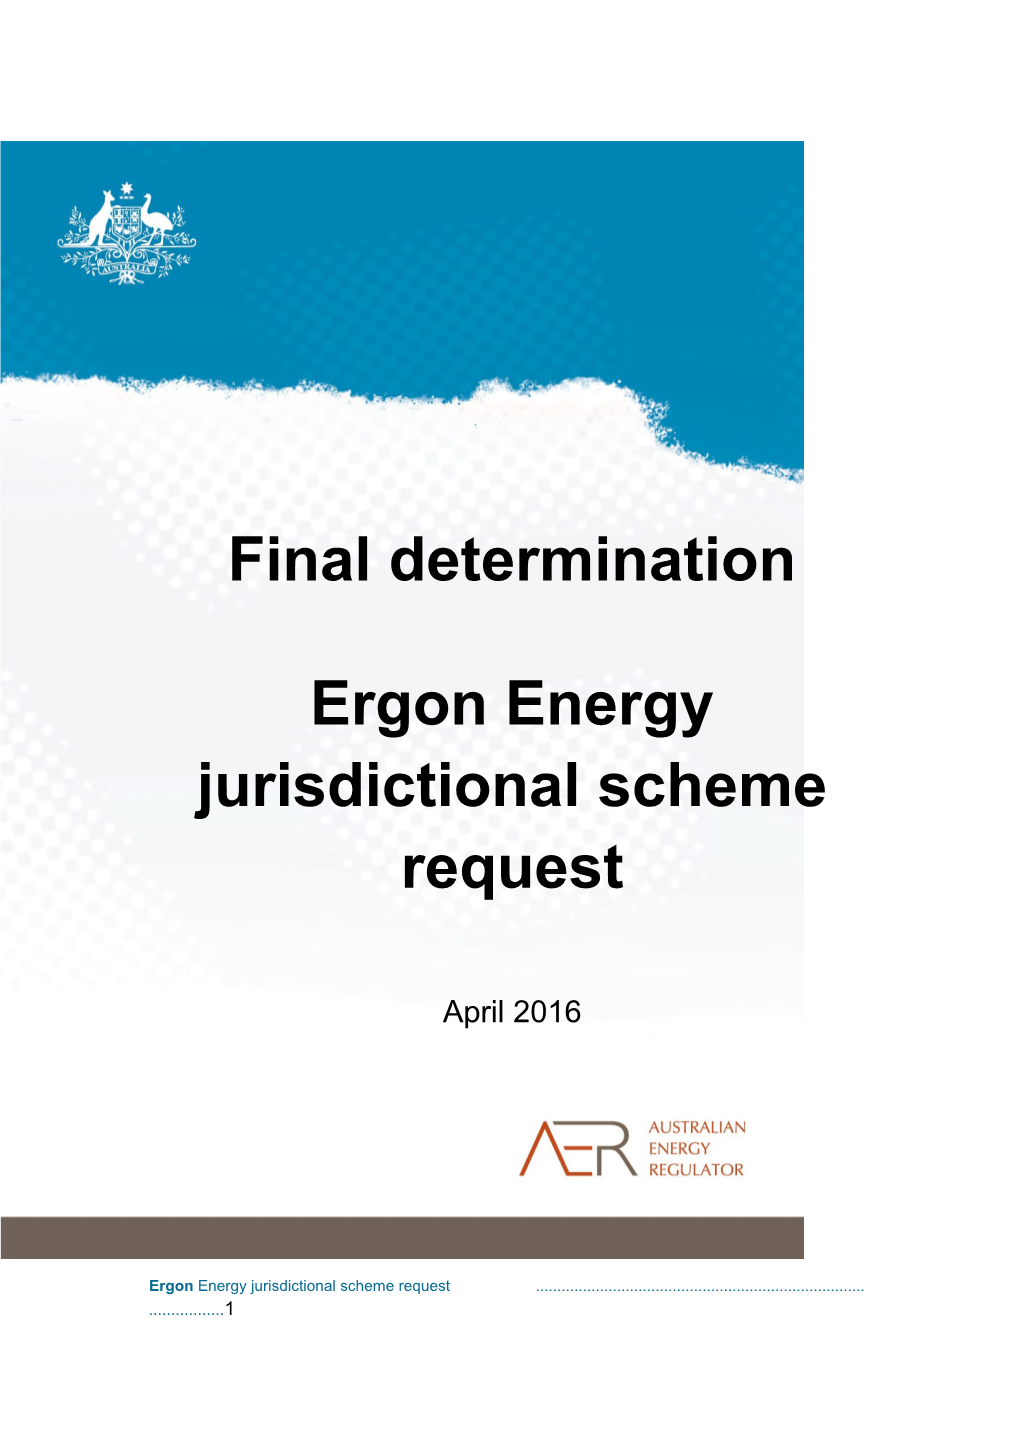 Ergon Energy Jurisdictional Scheme Request